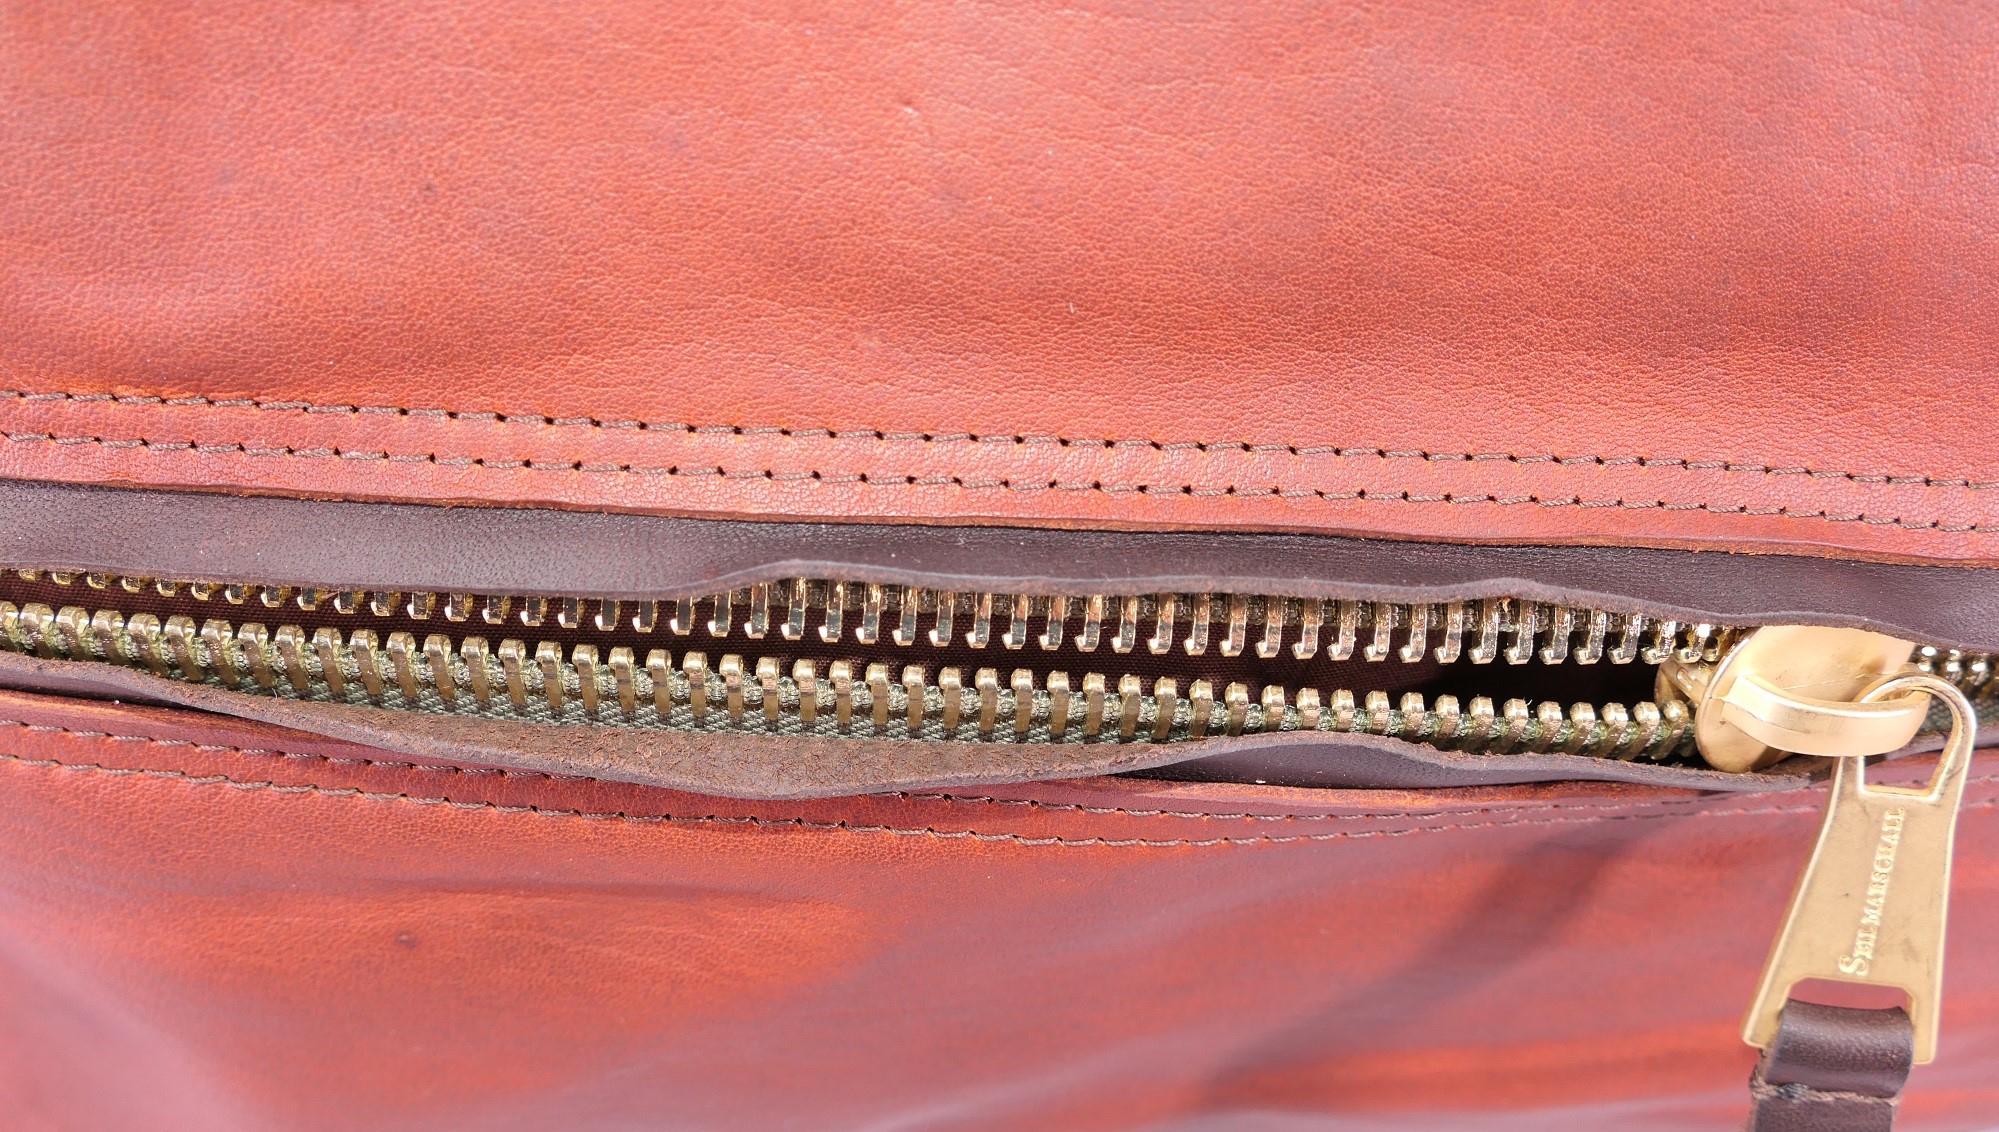 Legend Travelbag (Leather)